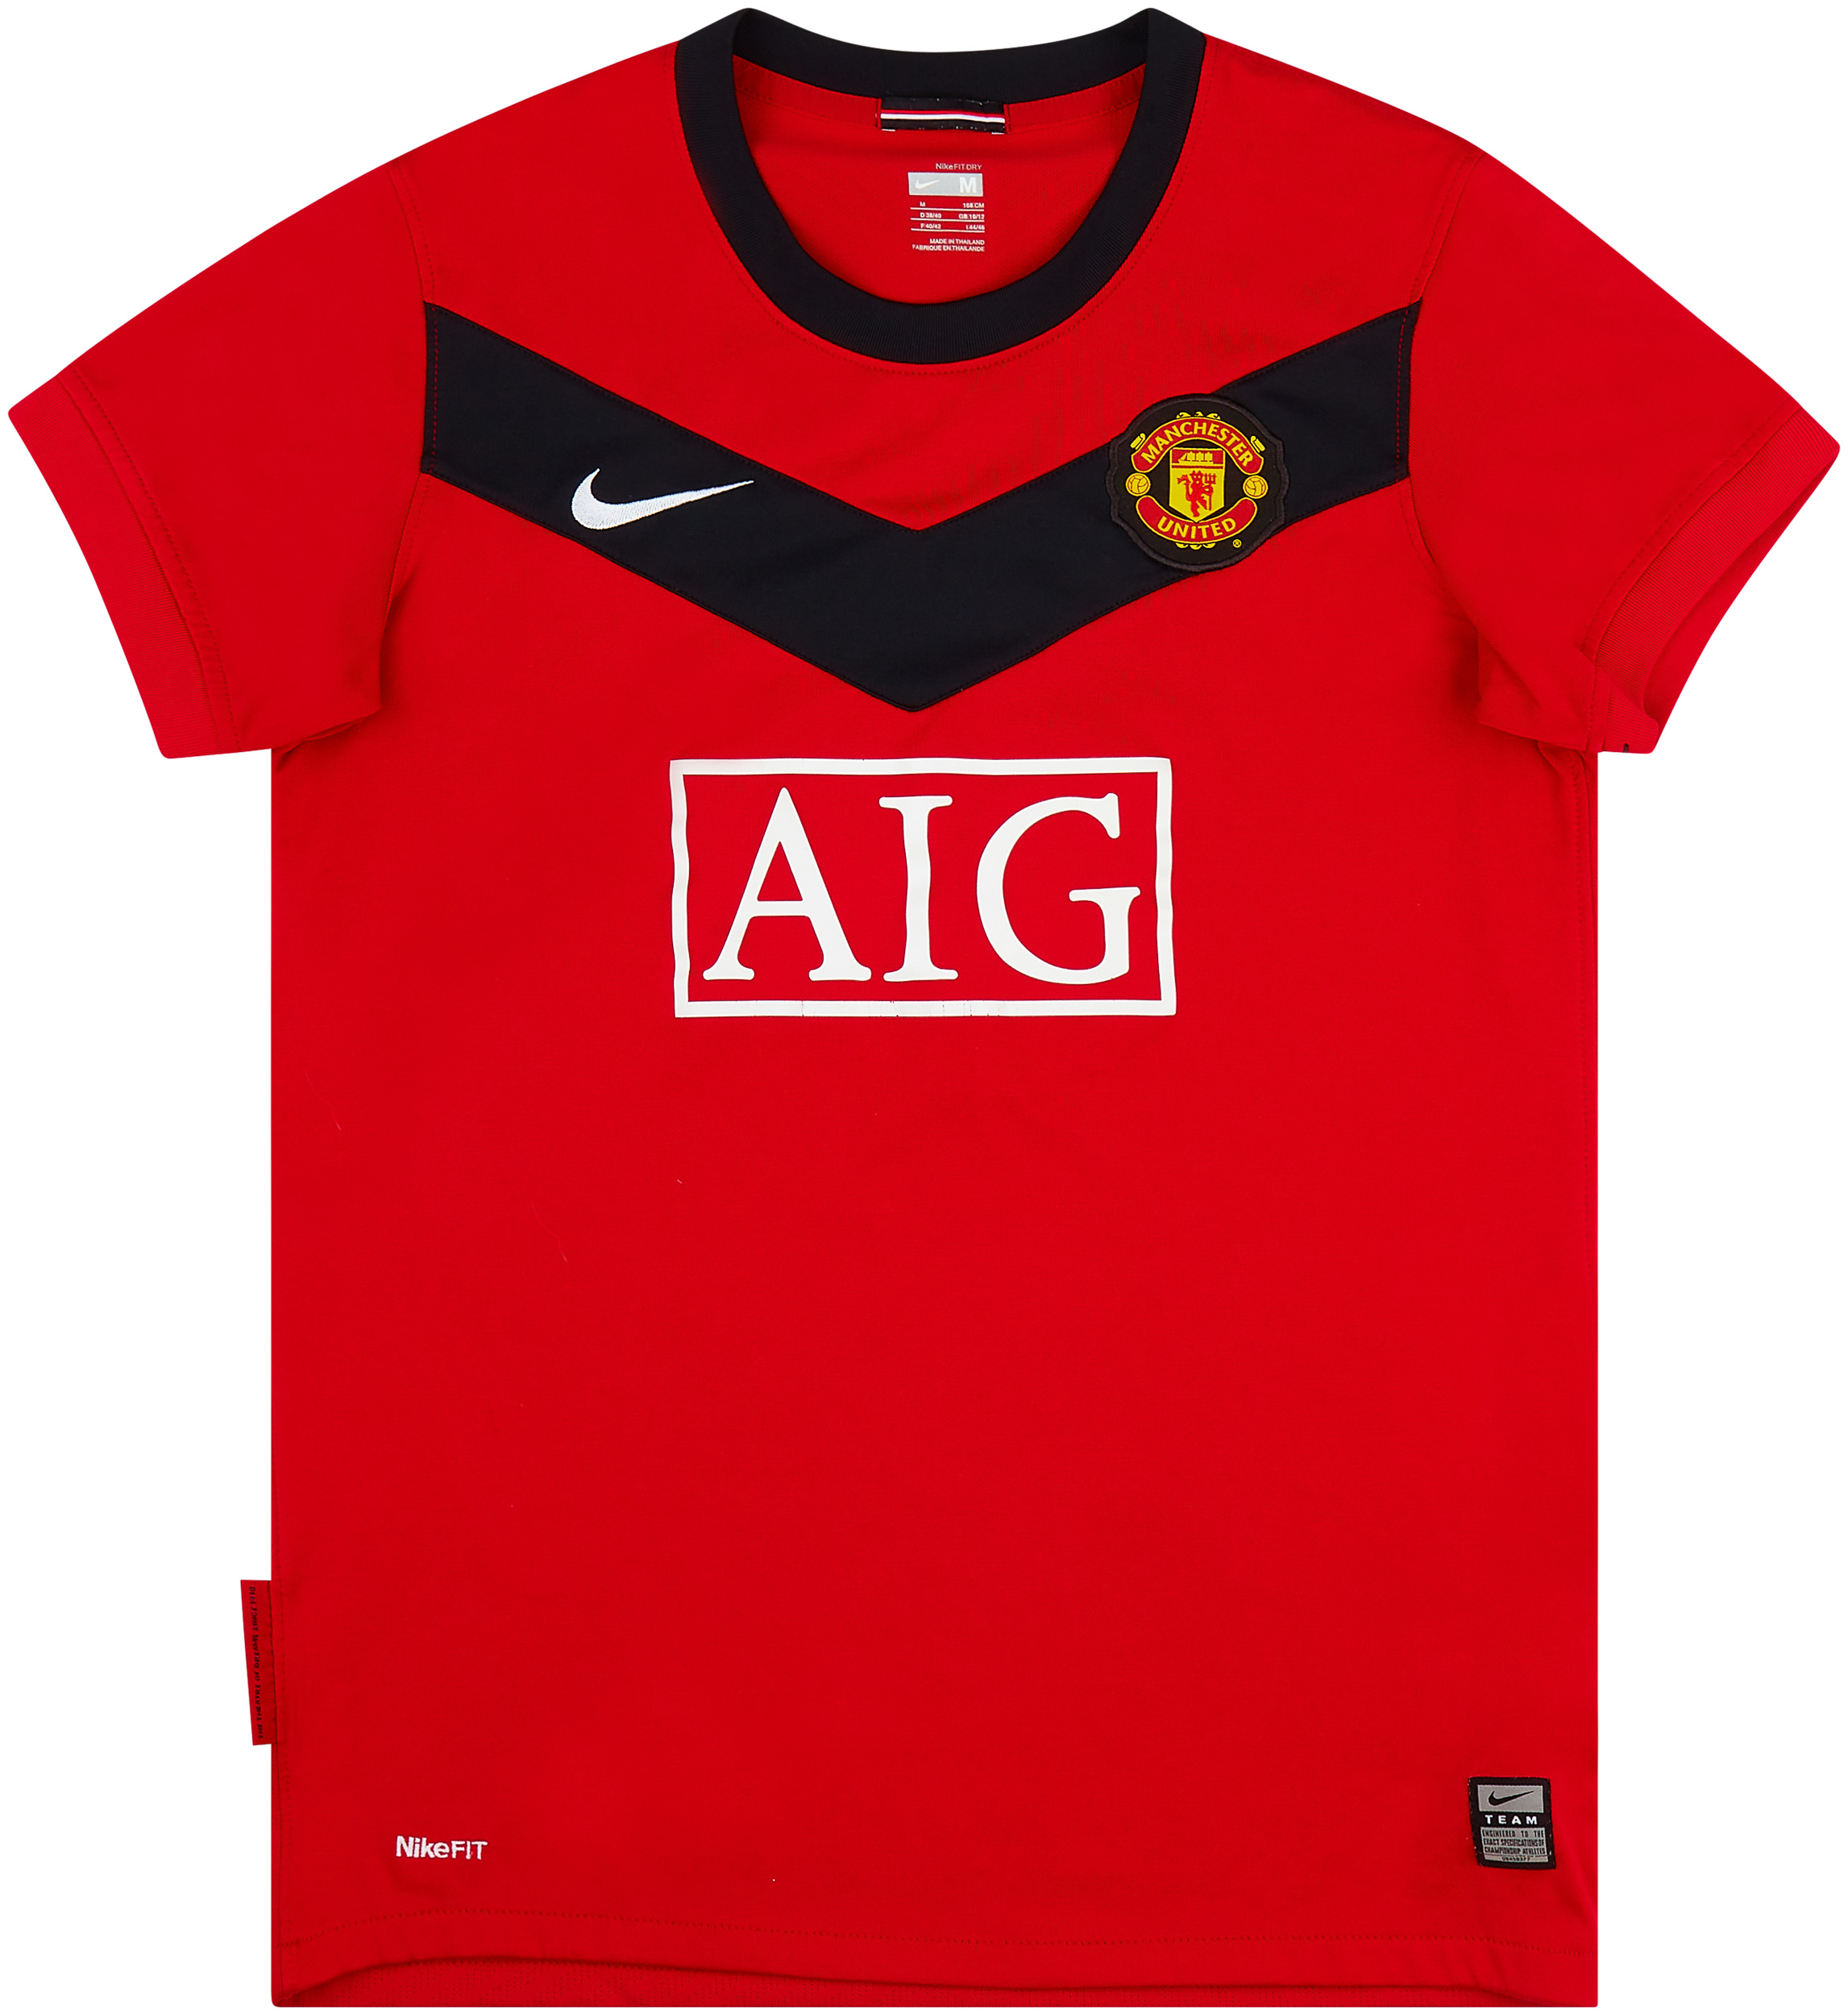 2009-10 Manchester United Home Shirt - 6/10 - (Women's )